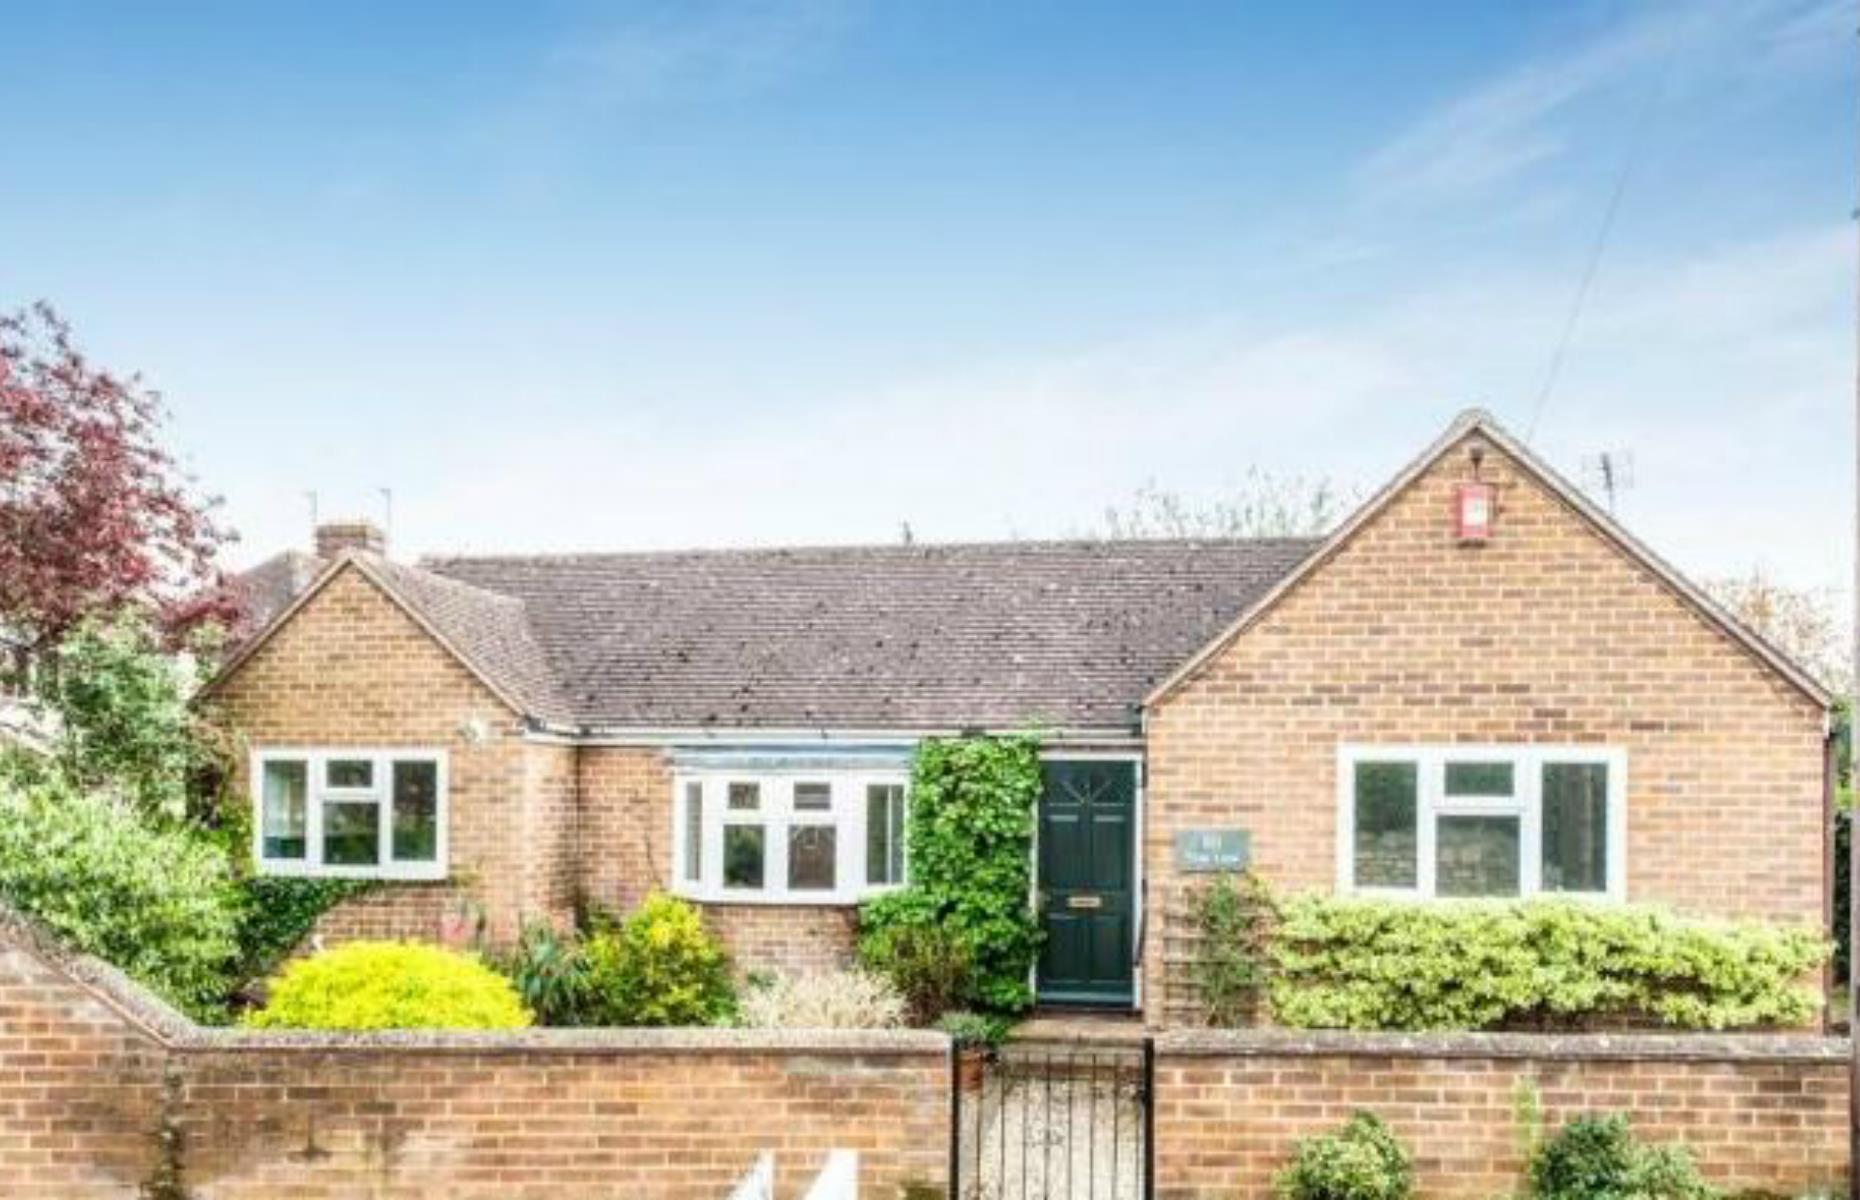 Oxfordshire – average house price: £502,817